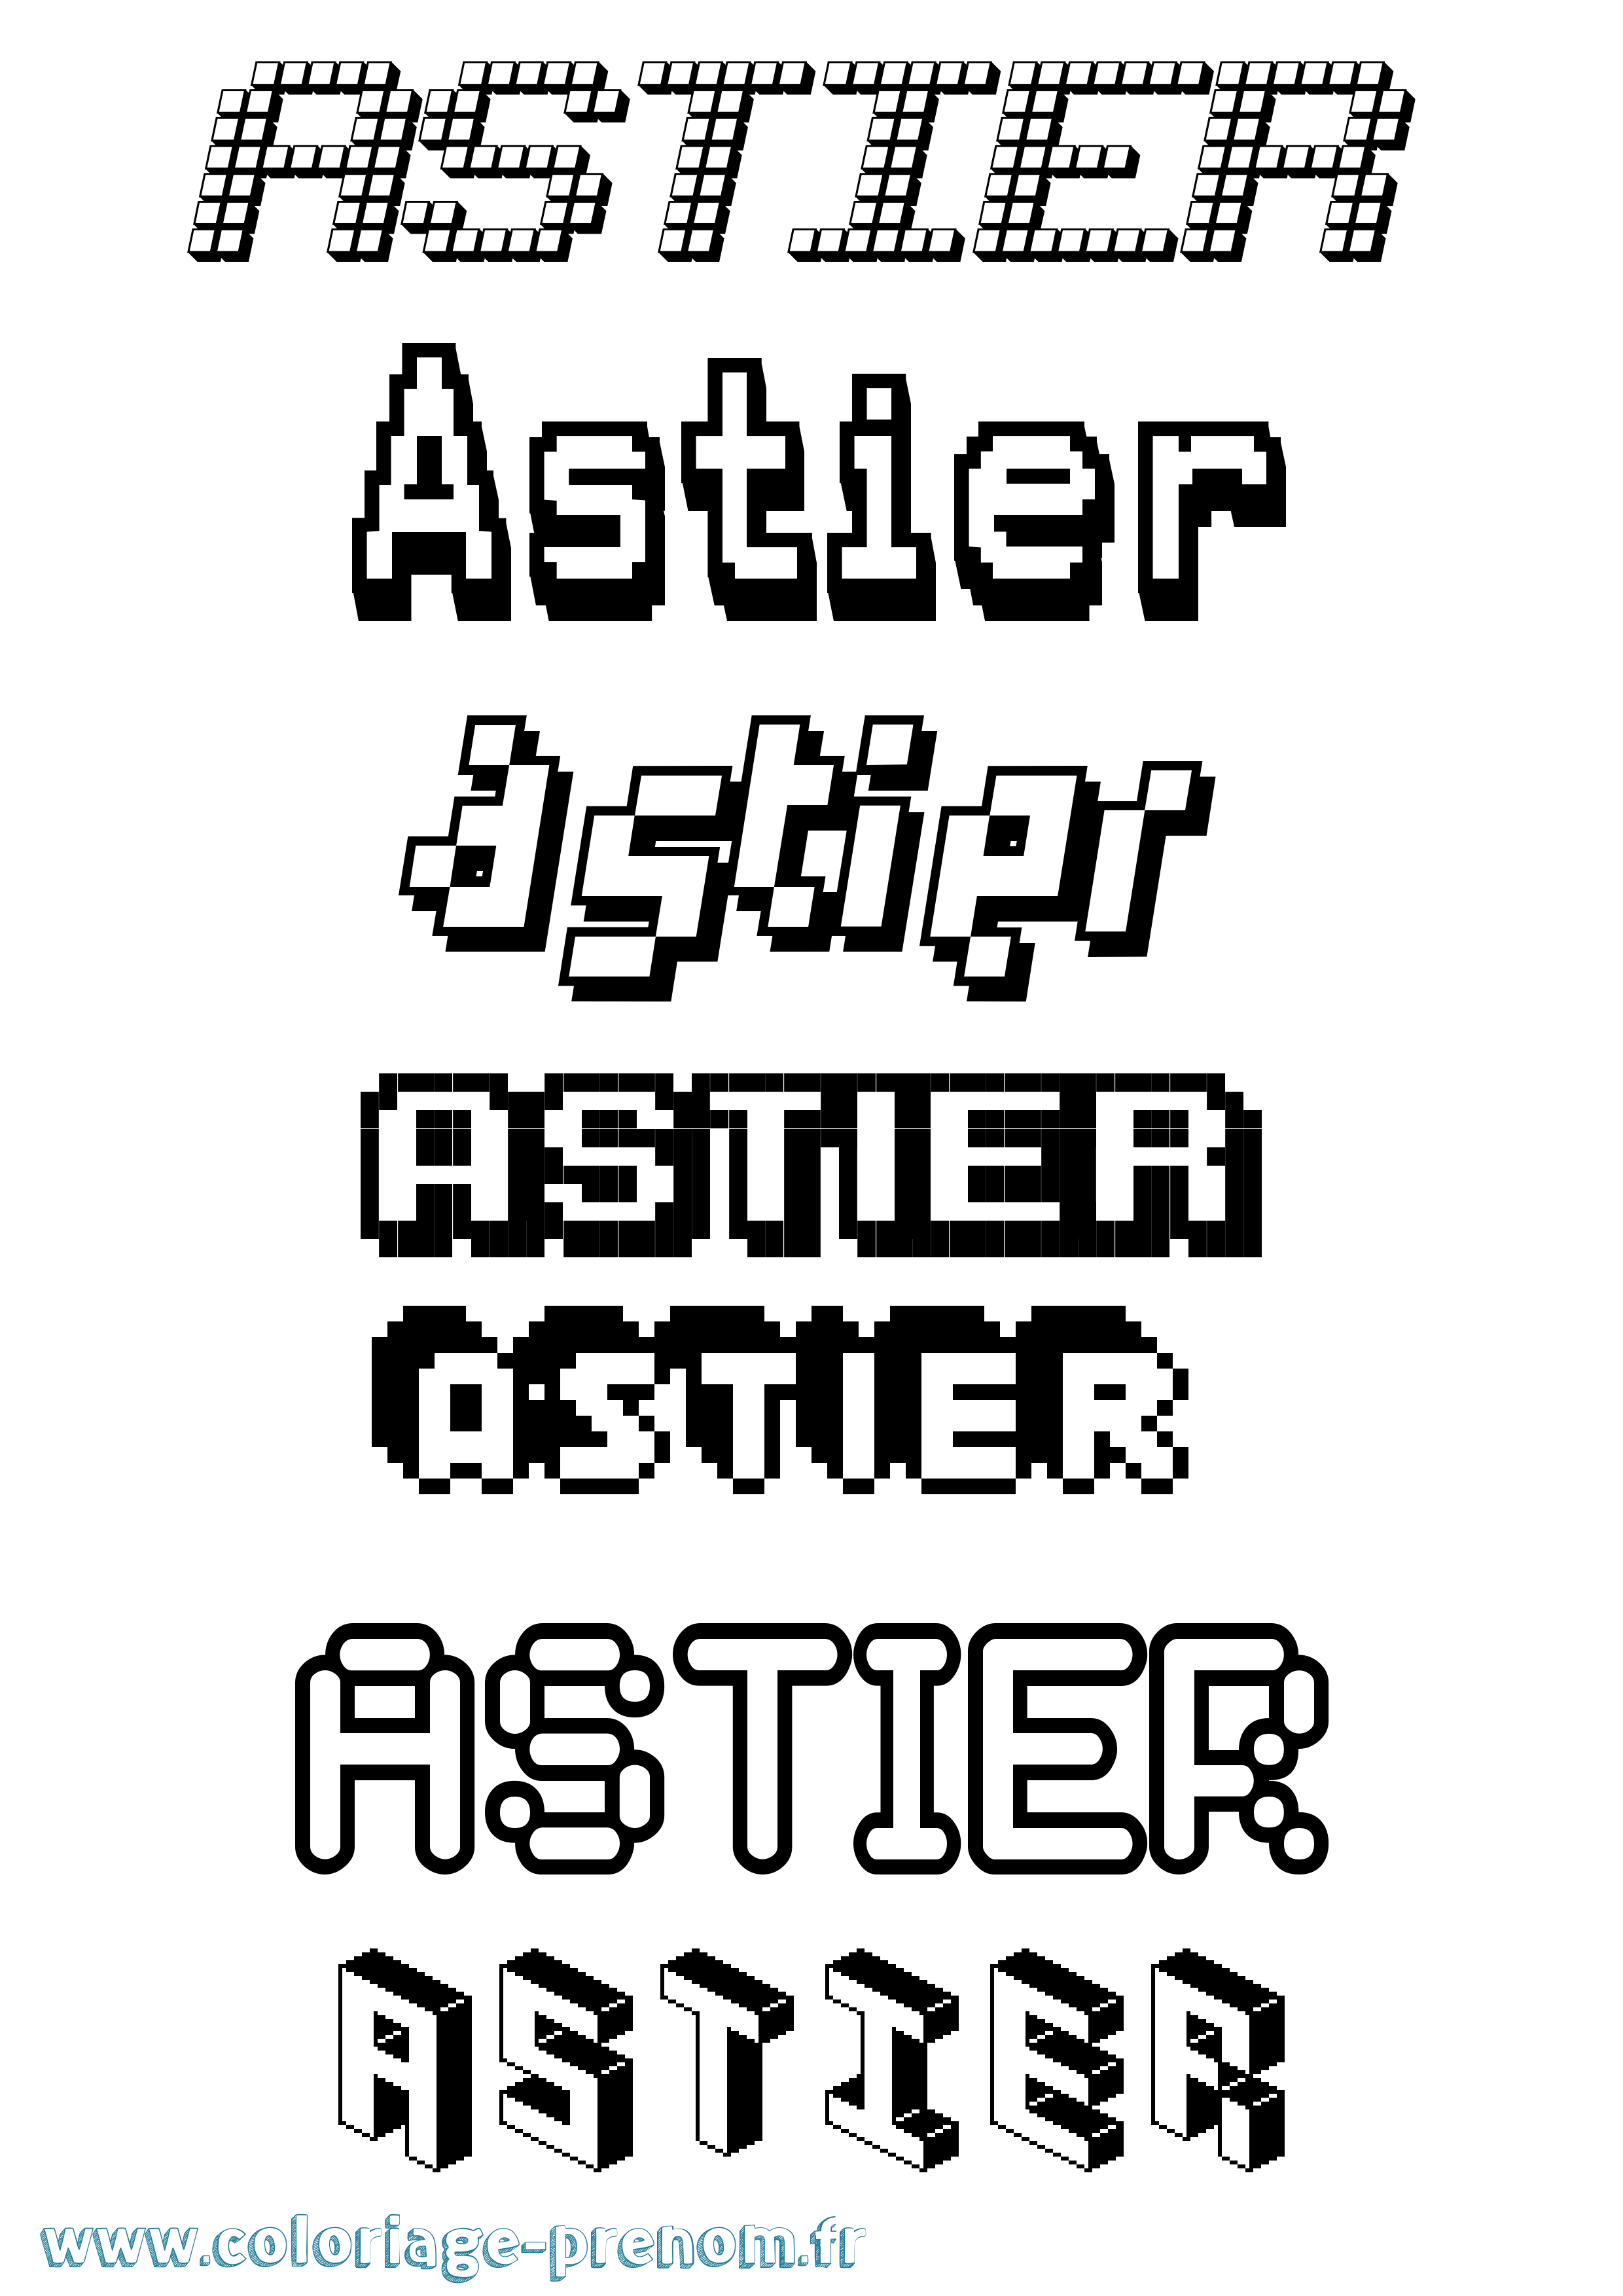 Coloriage prénom Astier Pixel